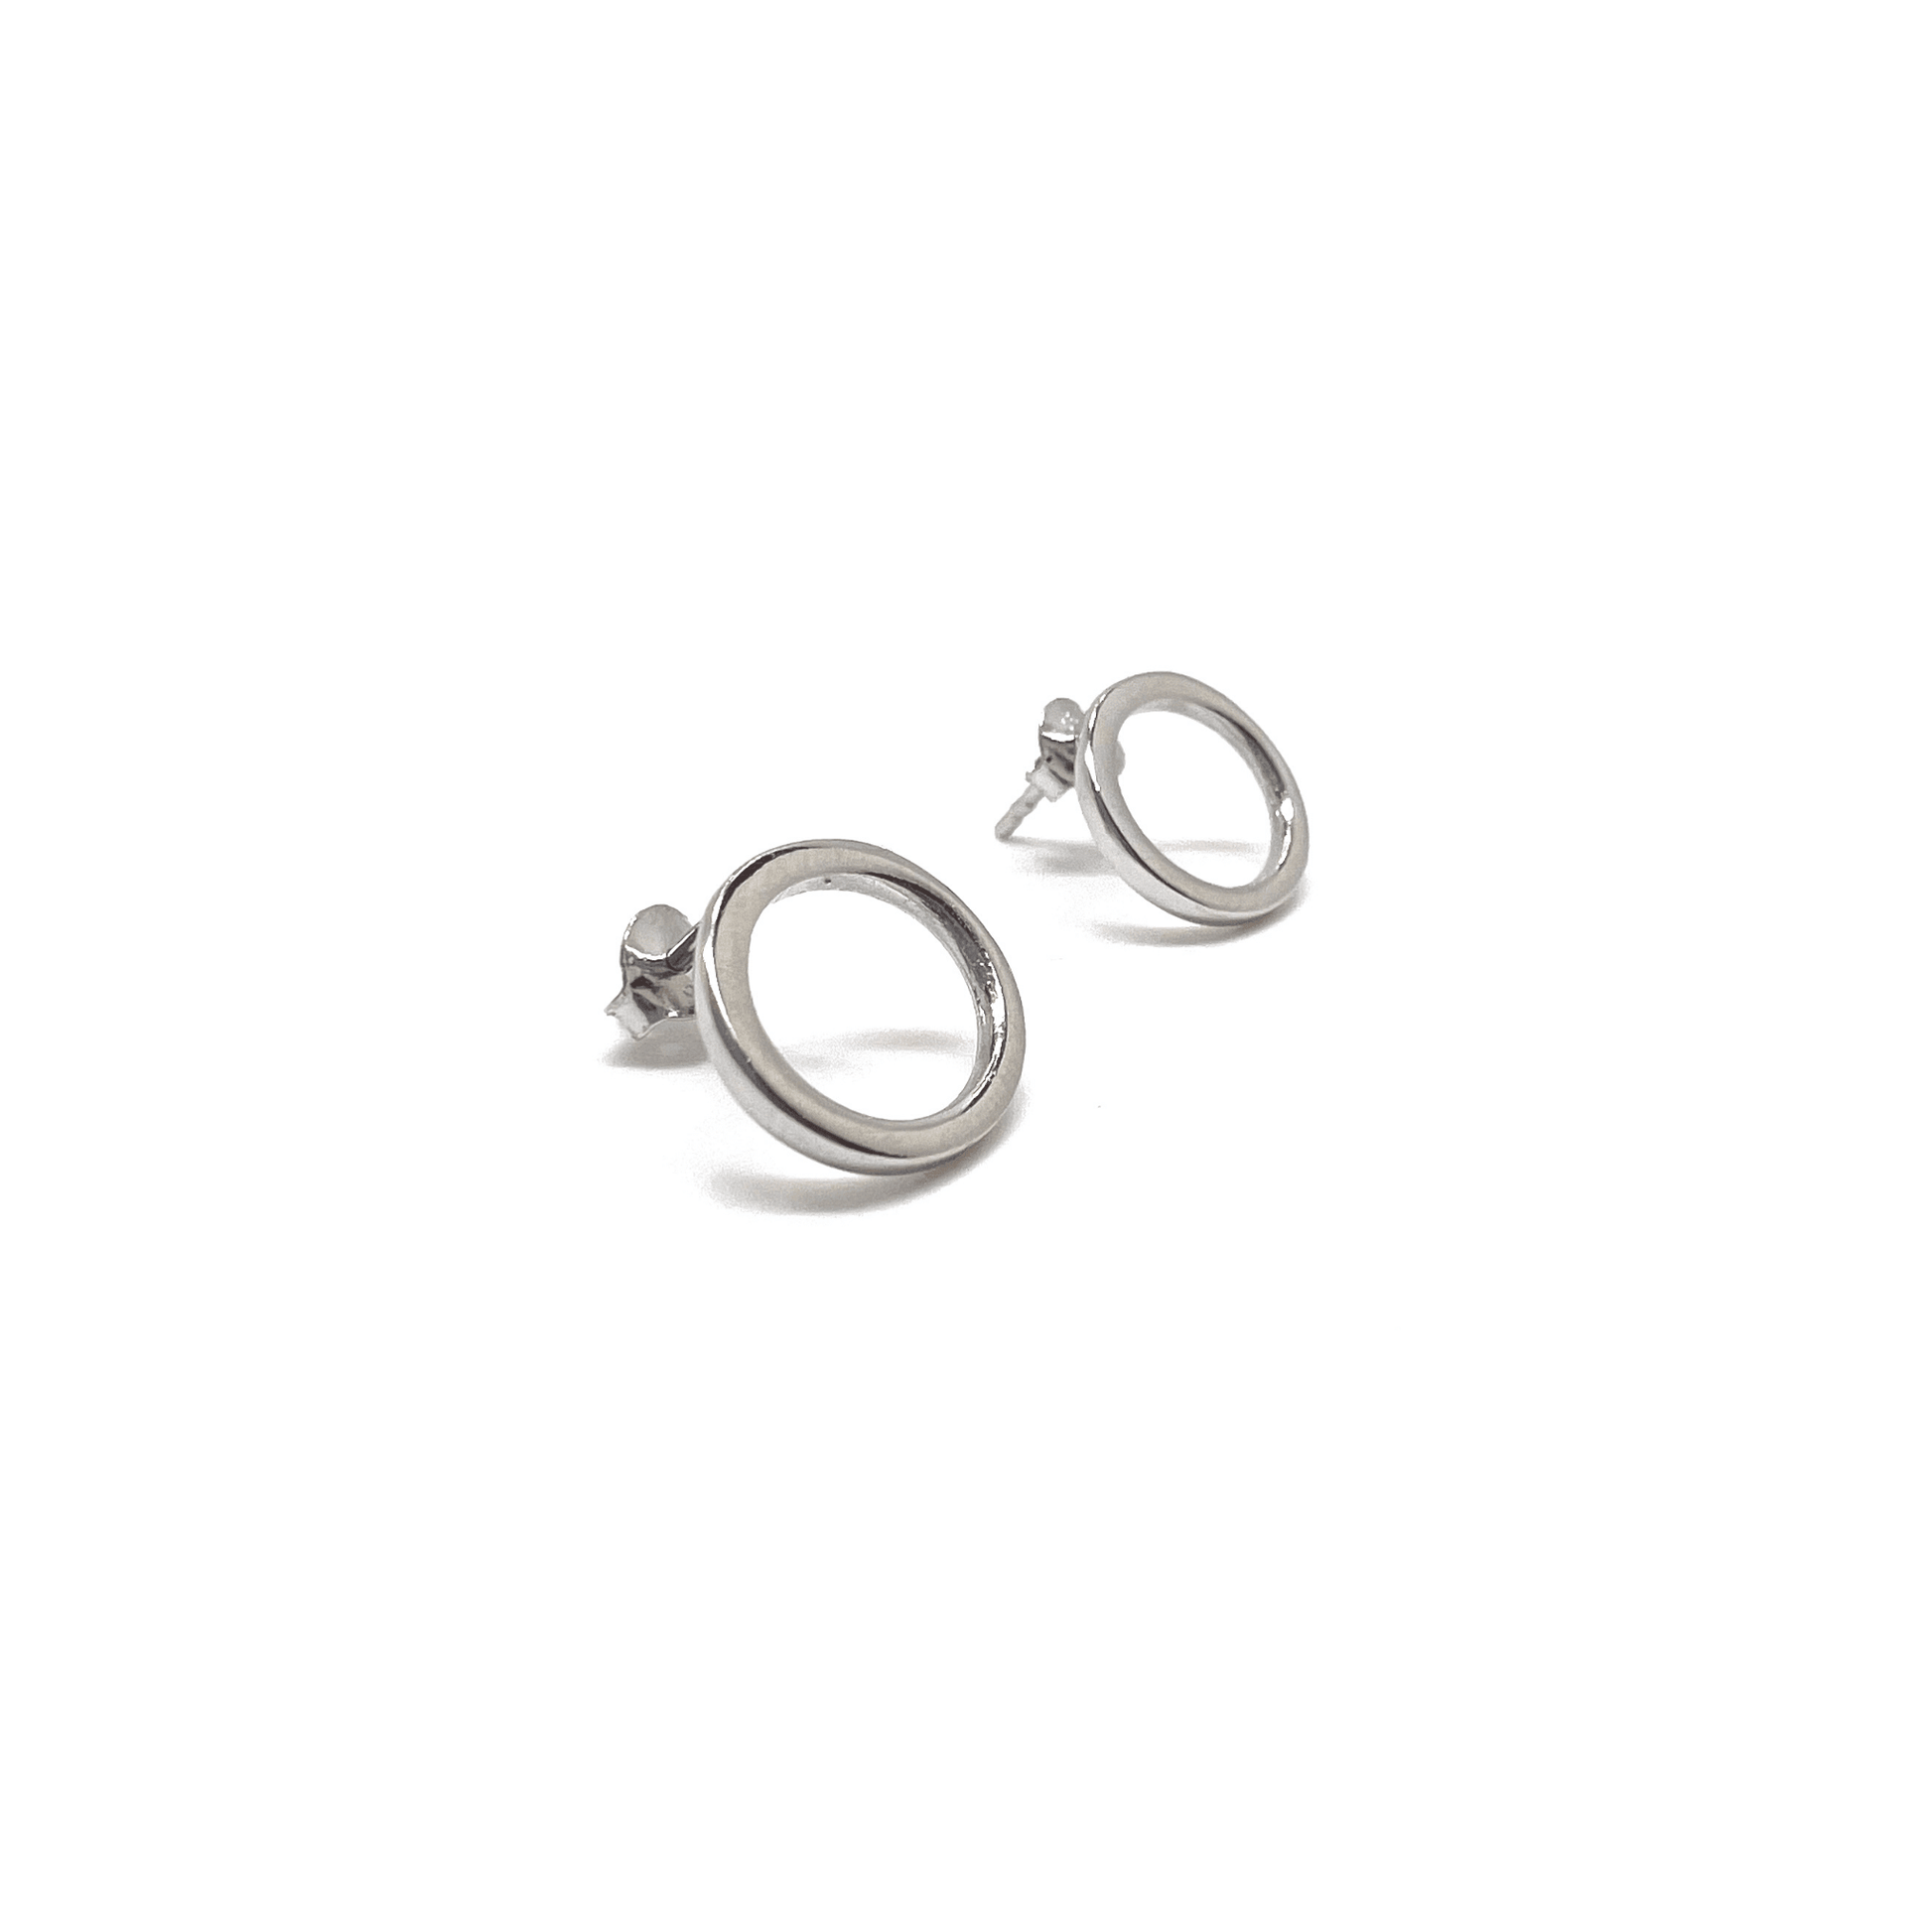 Stud earrings, Round Sterling silver earrings, Dainty Silver earrings - Naked Nation UK